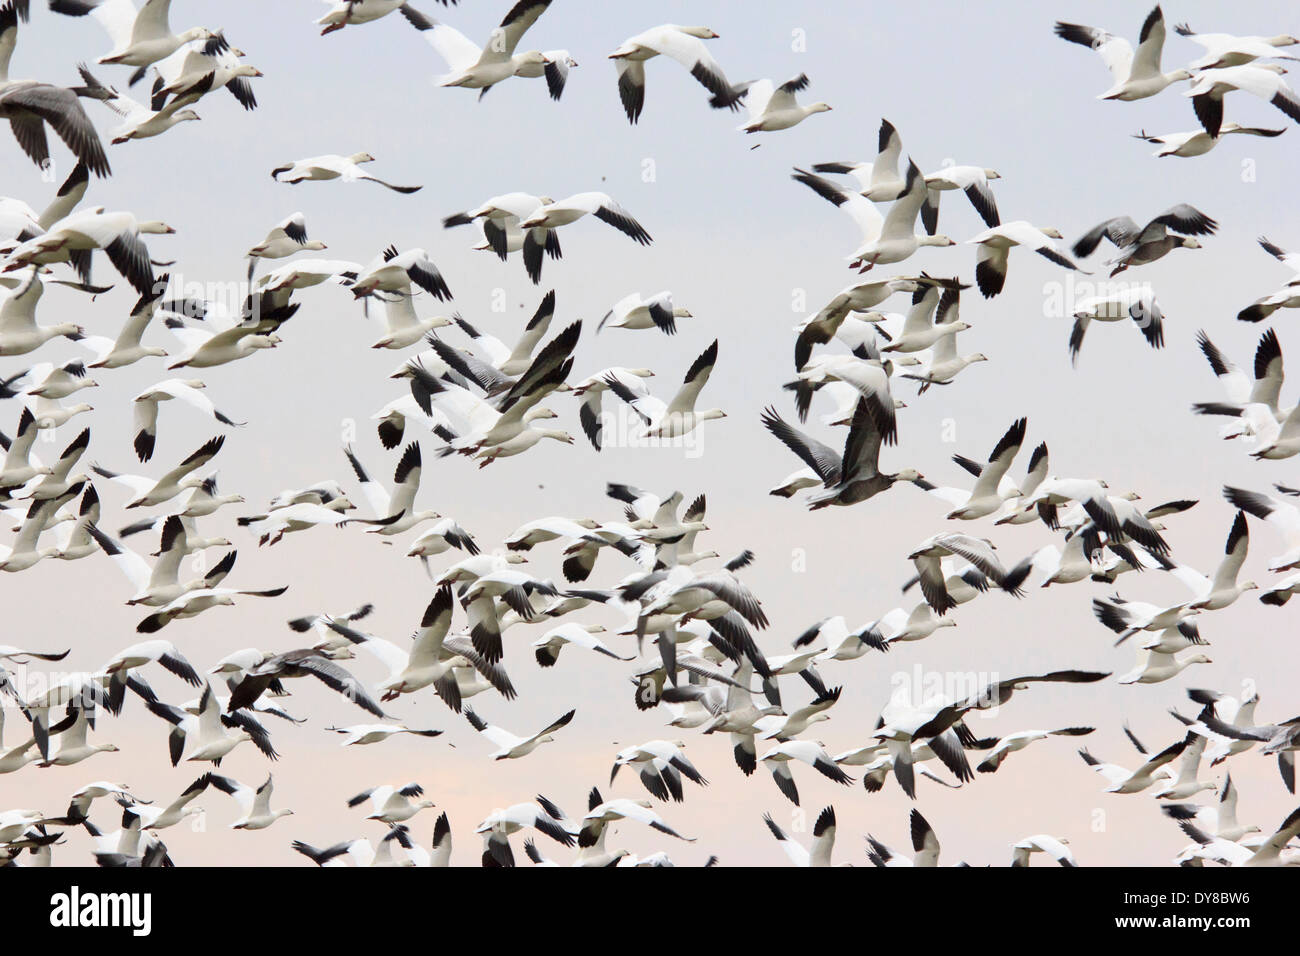 Chen caerulescens, geese, Hagerman, Lake Texoma, Snow Goose, Texas, TX, USA, United States, America, swarm, flying, birds Stock Photo